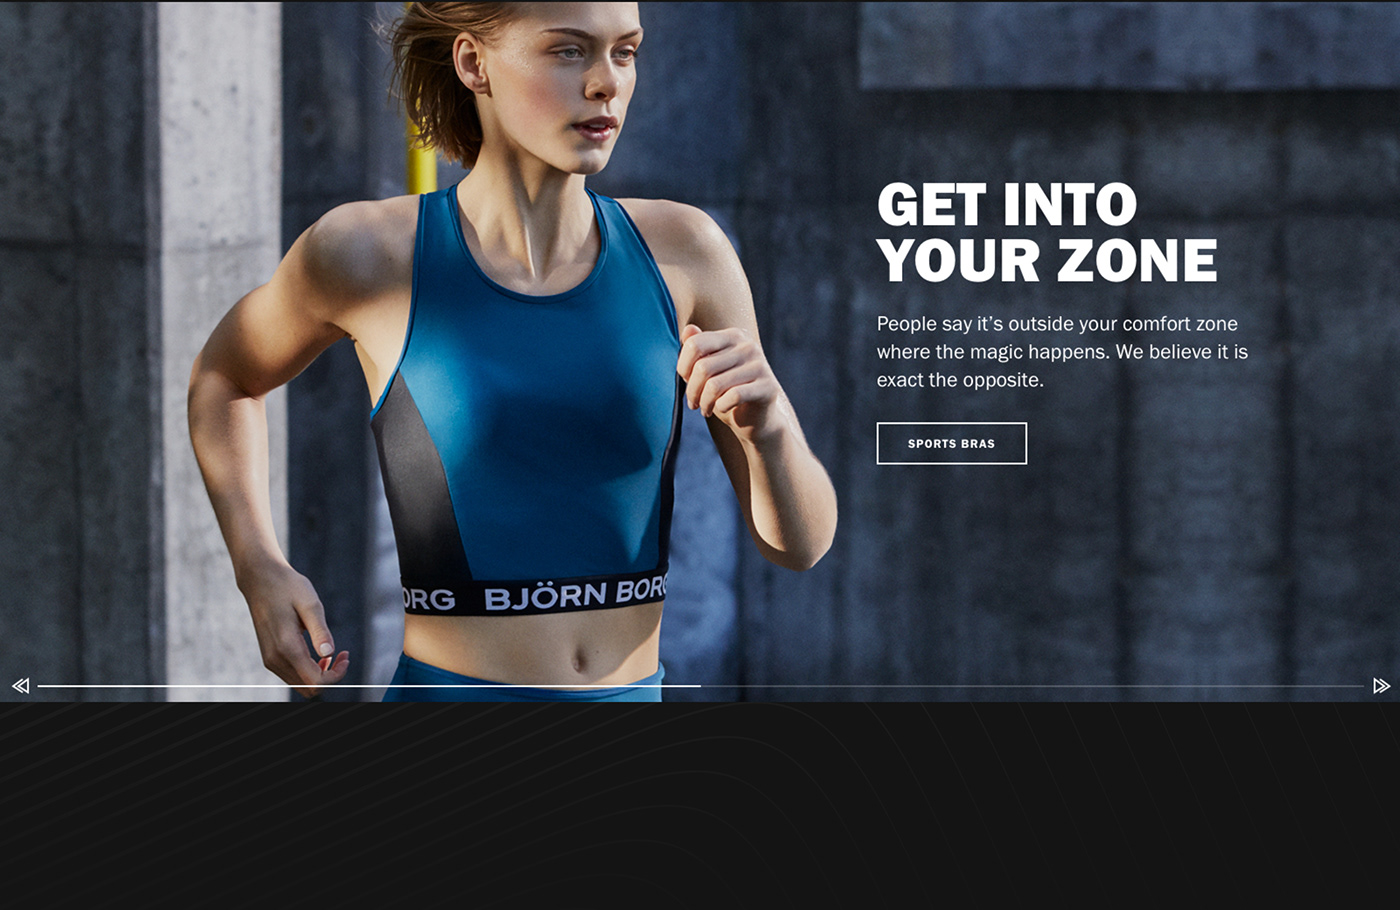 Responsive e-commerce Fashion  Sportswear sports Clothing mobile homepage grid